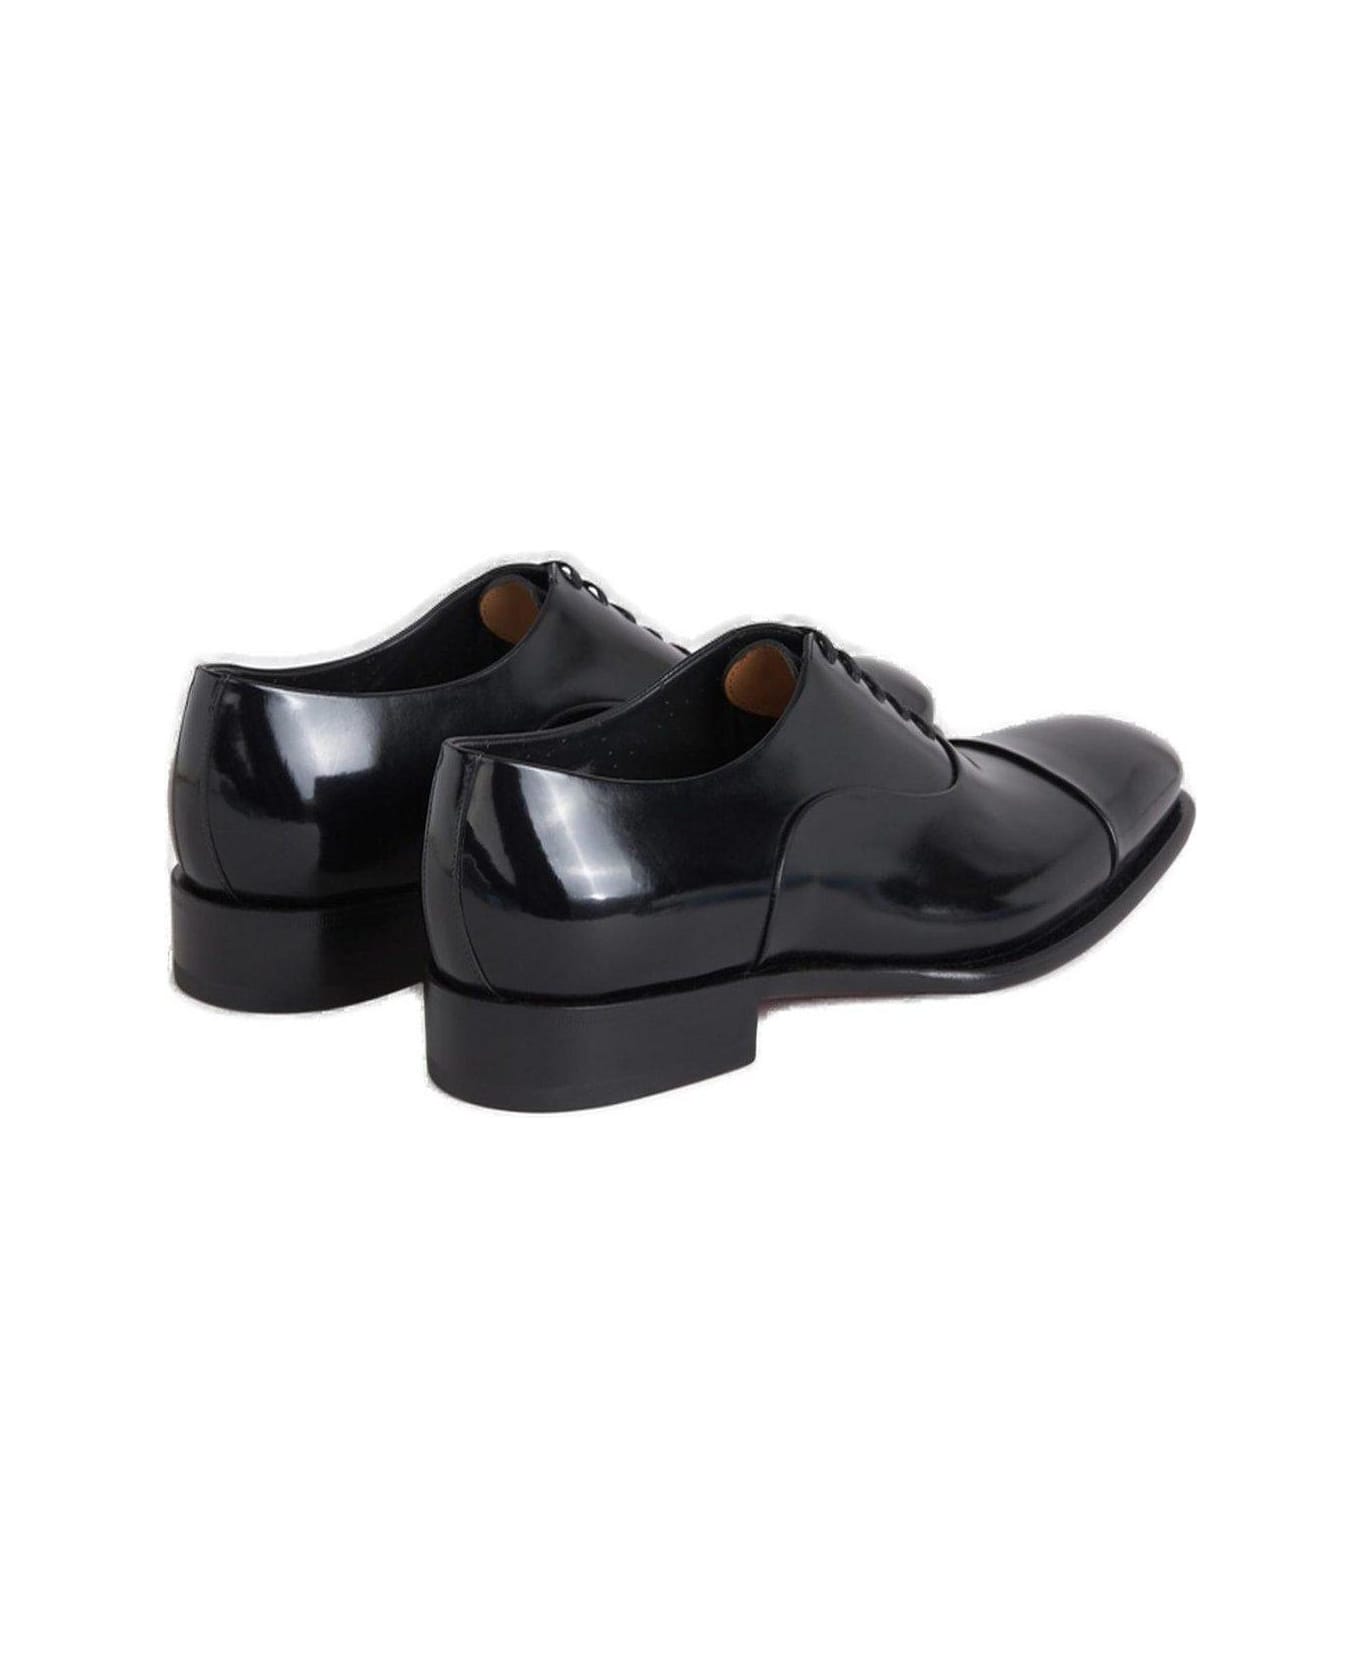 Santoni Round Toe Slip-on Oxford Shoes - Black